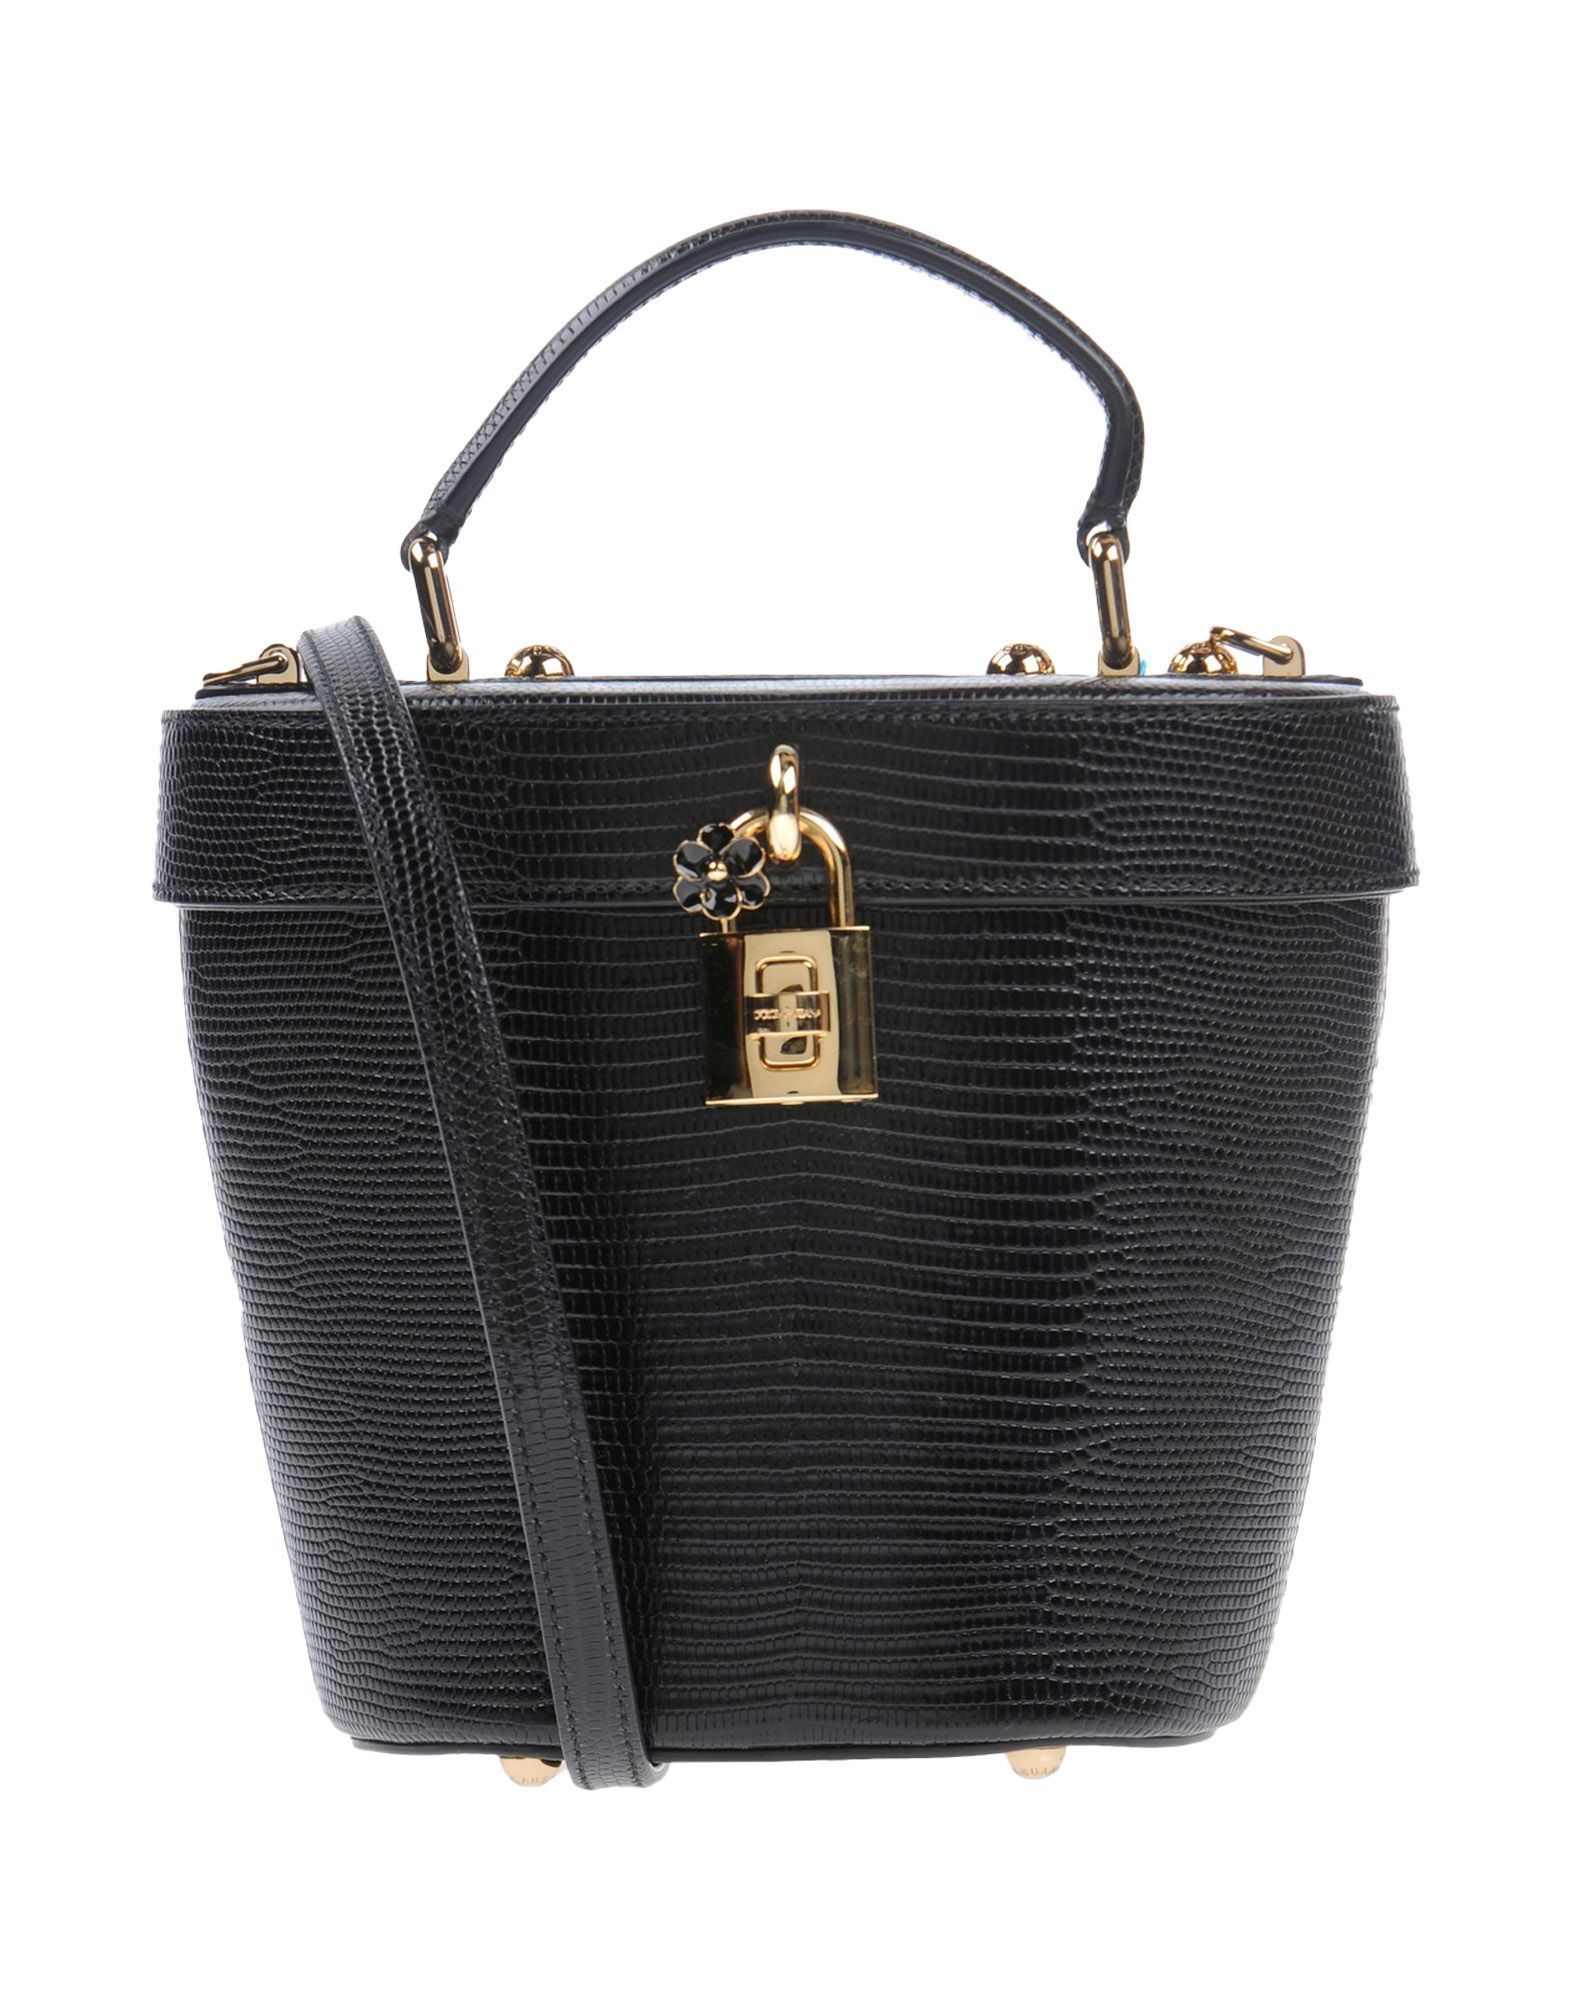 DOLCE & GABBANA Handbags | YOOX (US)